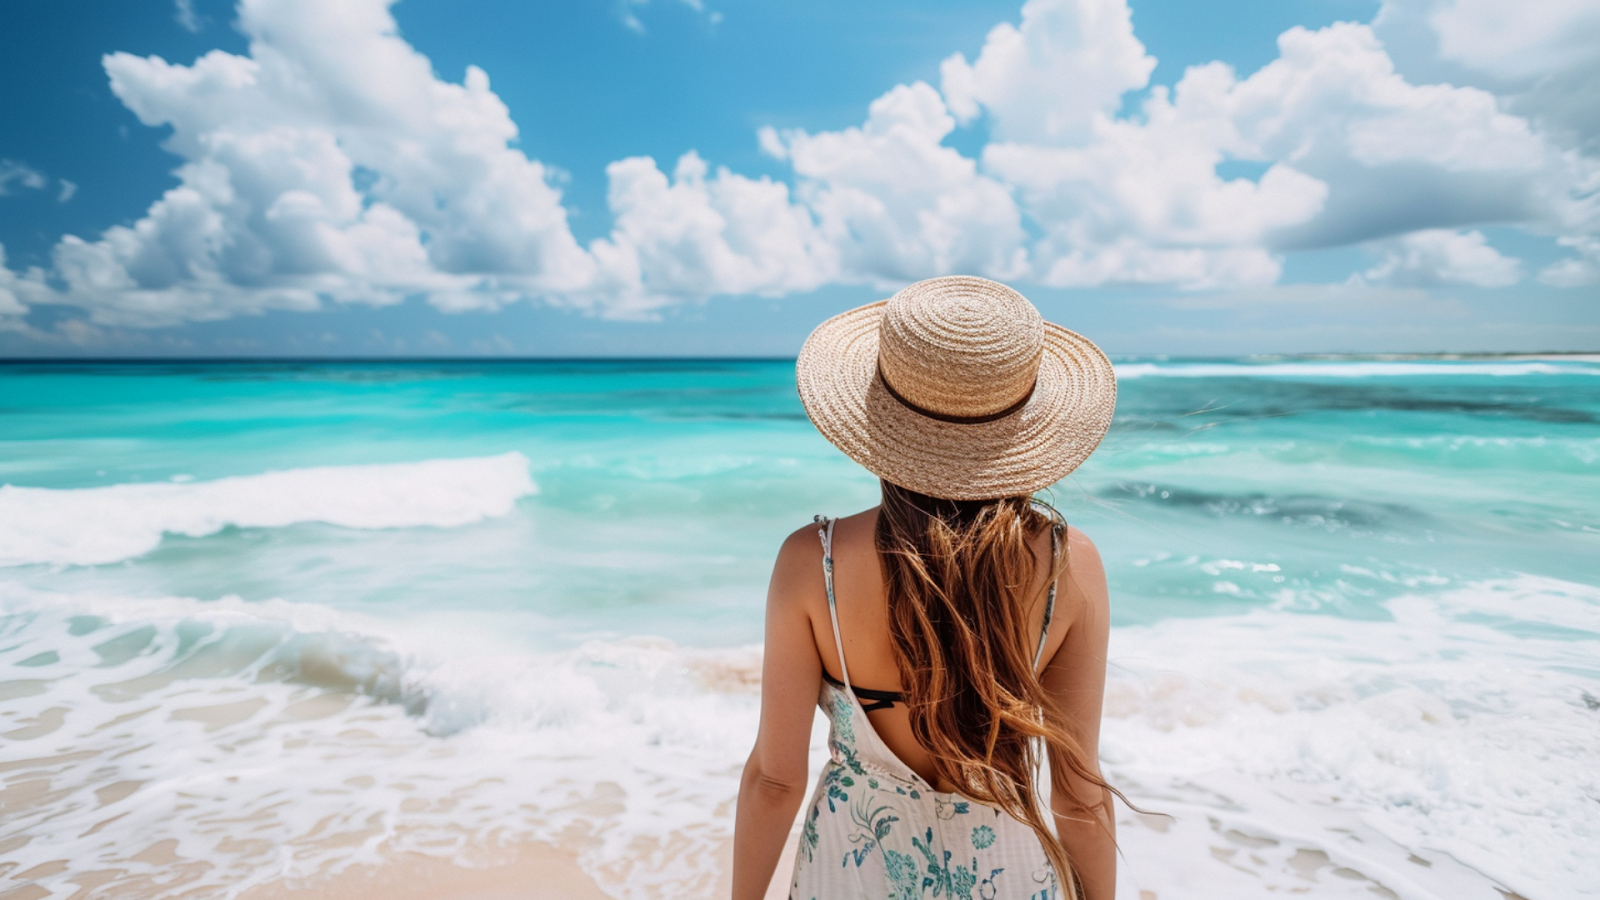 A woman with a sun hat on the beach